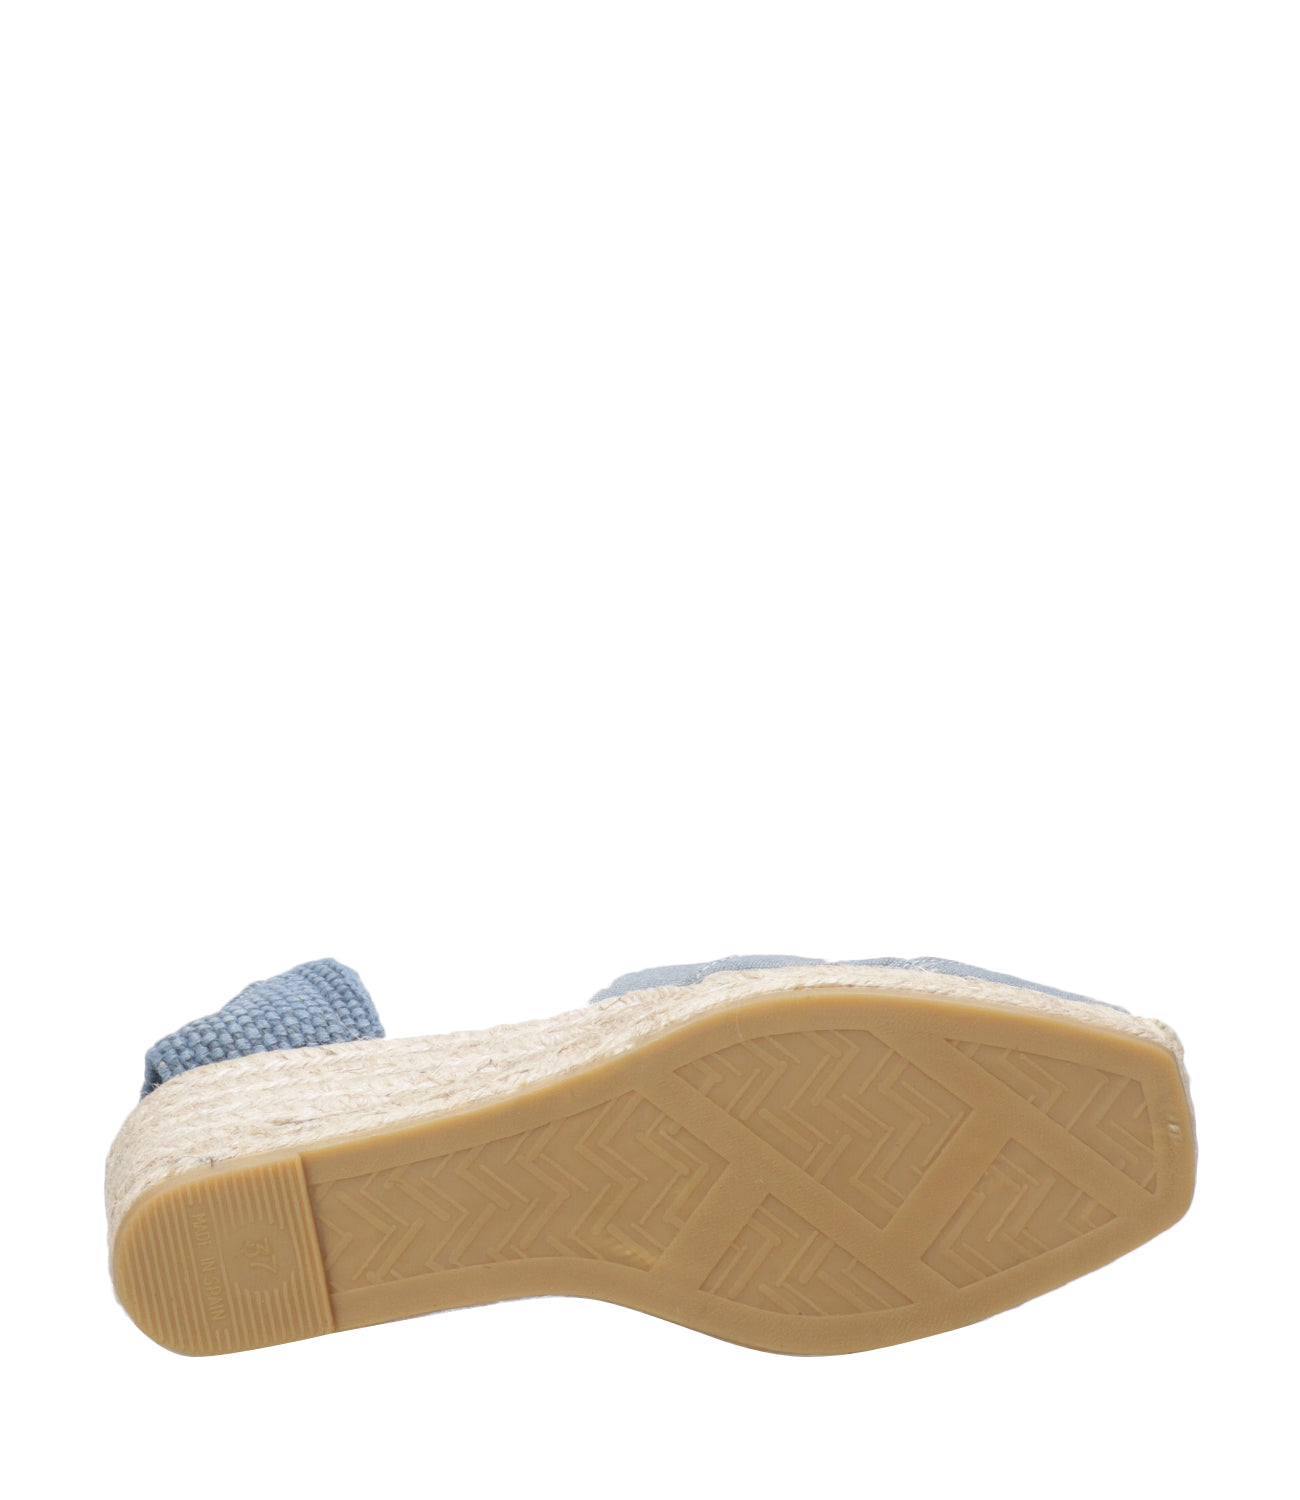 Espadrilles | Sandalo Tobi Pique Blu Jeans